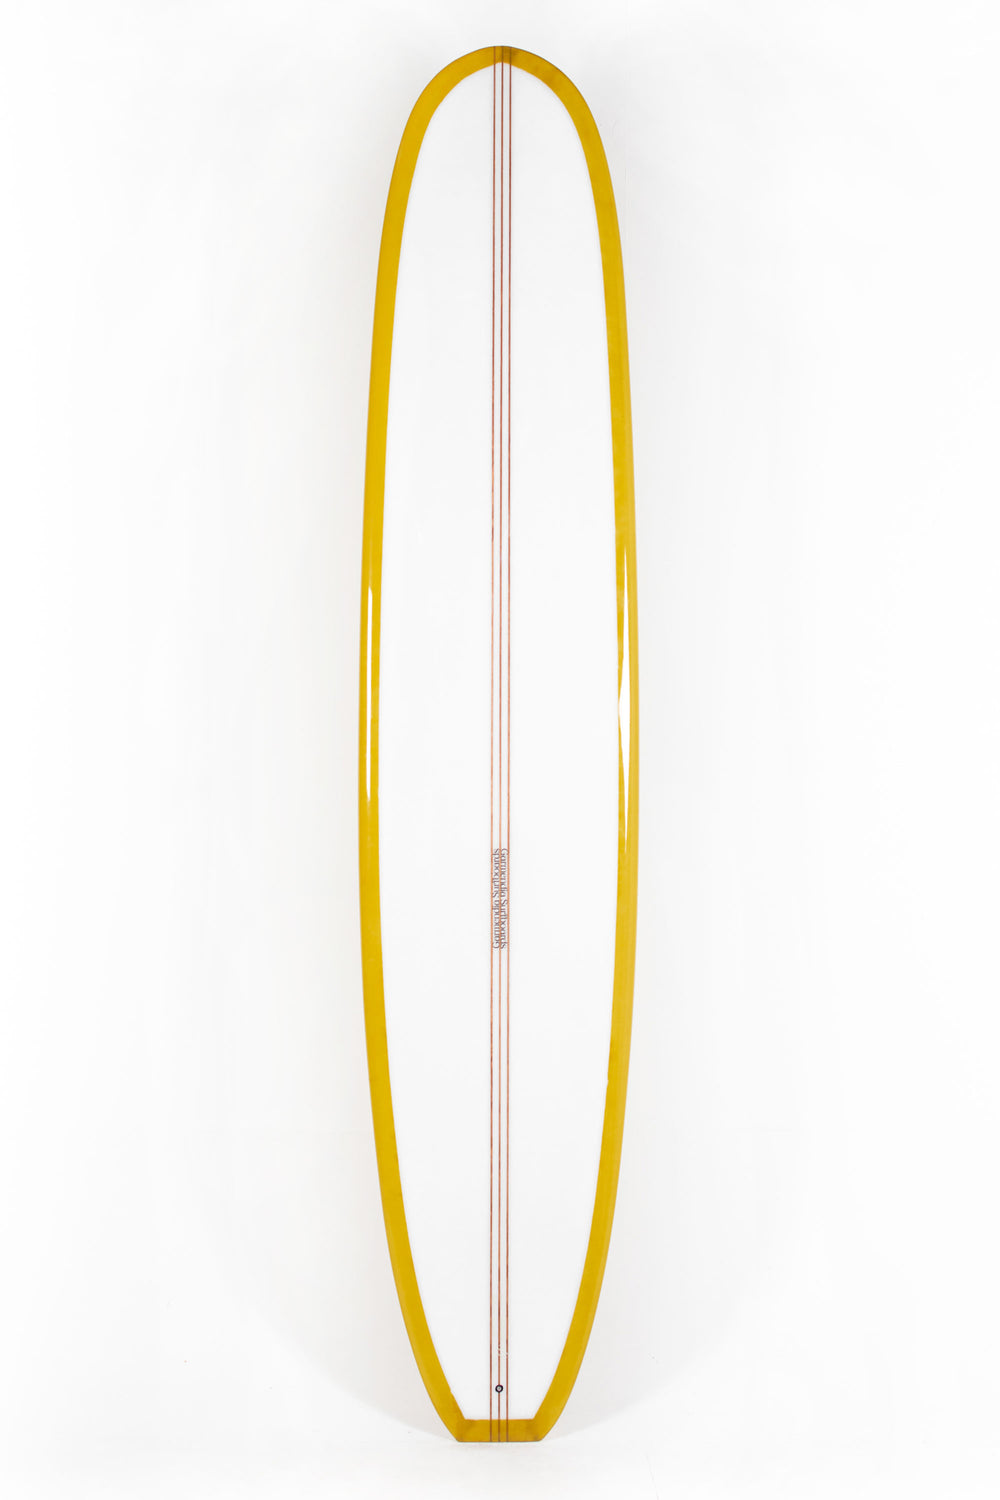 Pukas Surf Shop - Garmendia Surfboards - NOSERIDER - 9'6